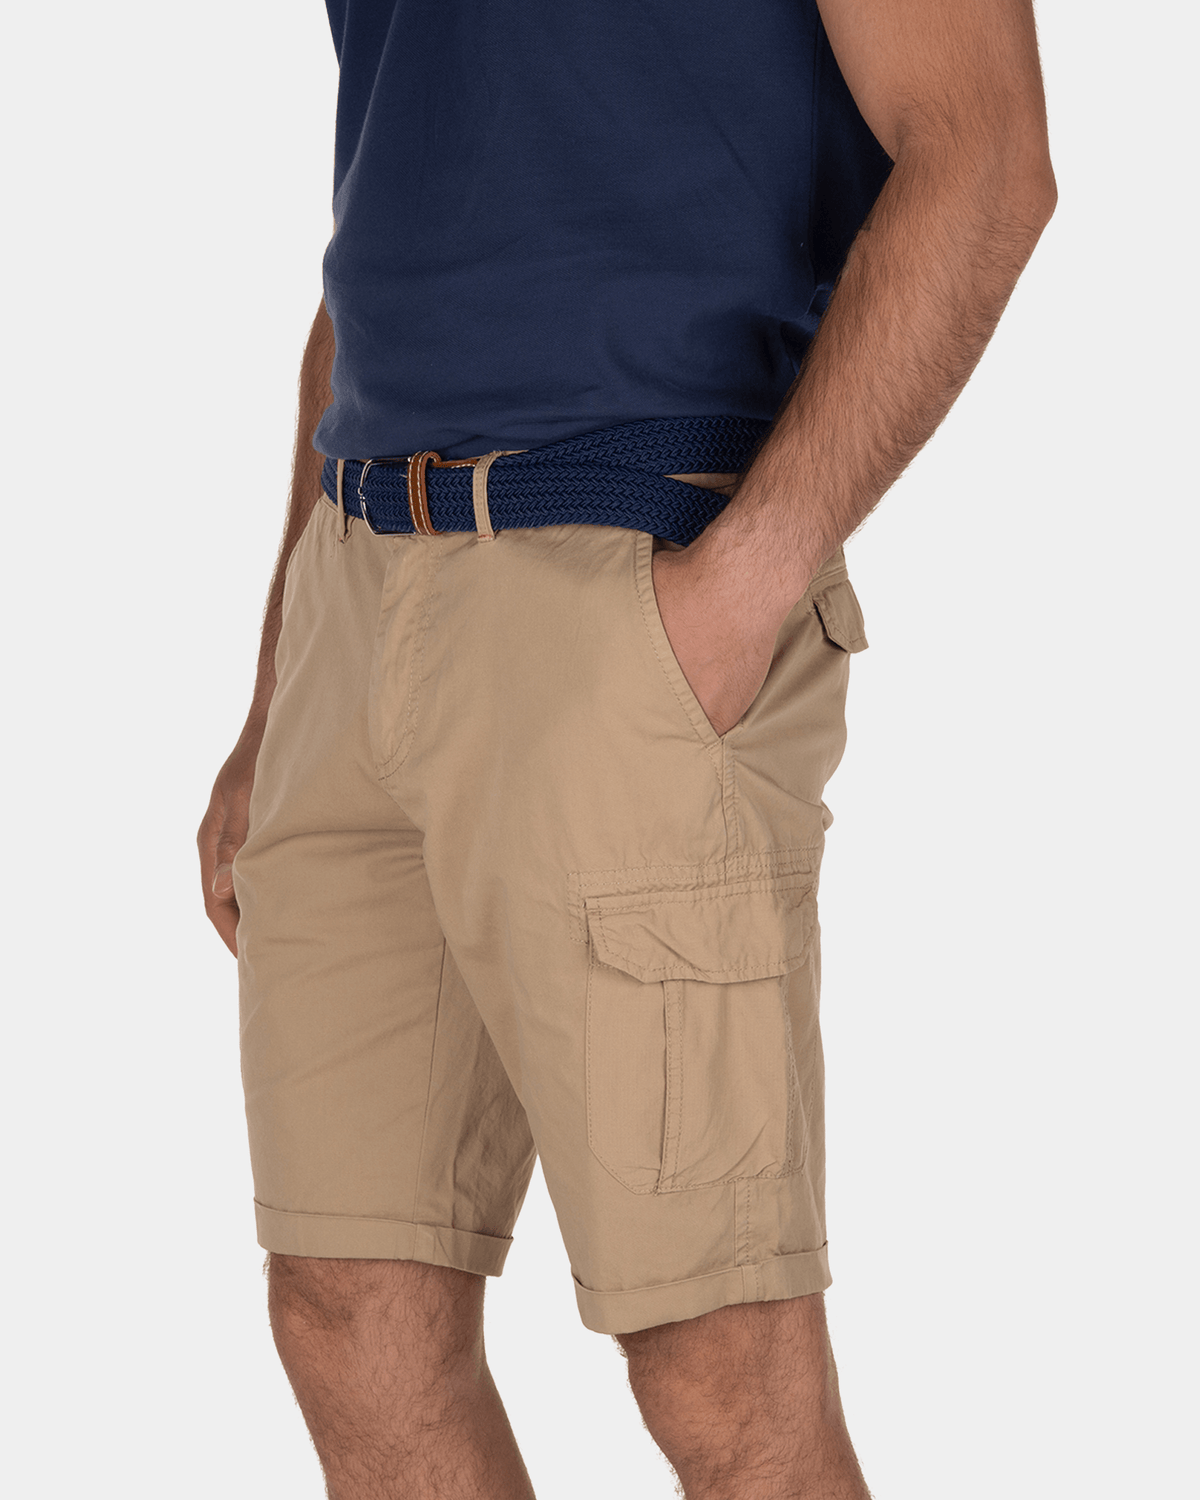 Larry Bay cargo shorts - Light Khaki